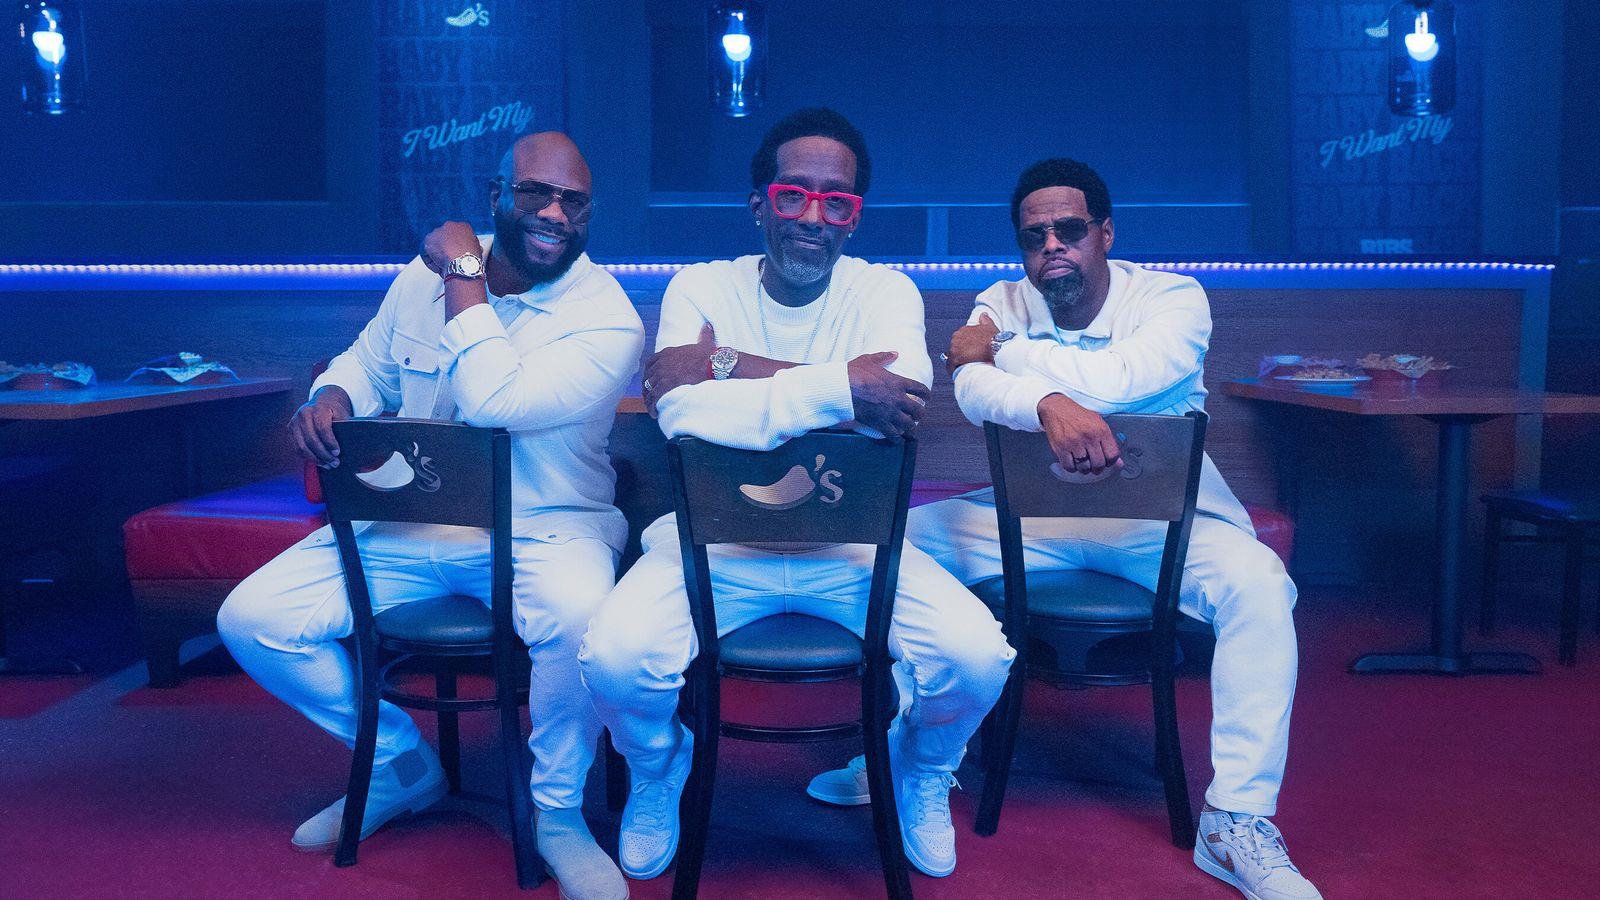 Chili’s remixes Baby Back Ribs jingle with Boyz II Men